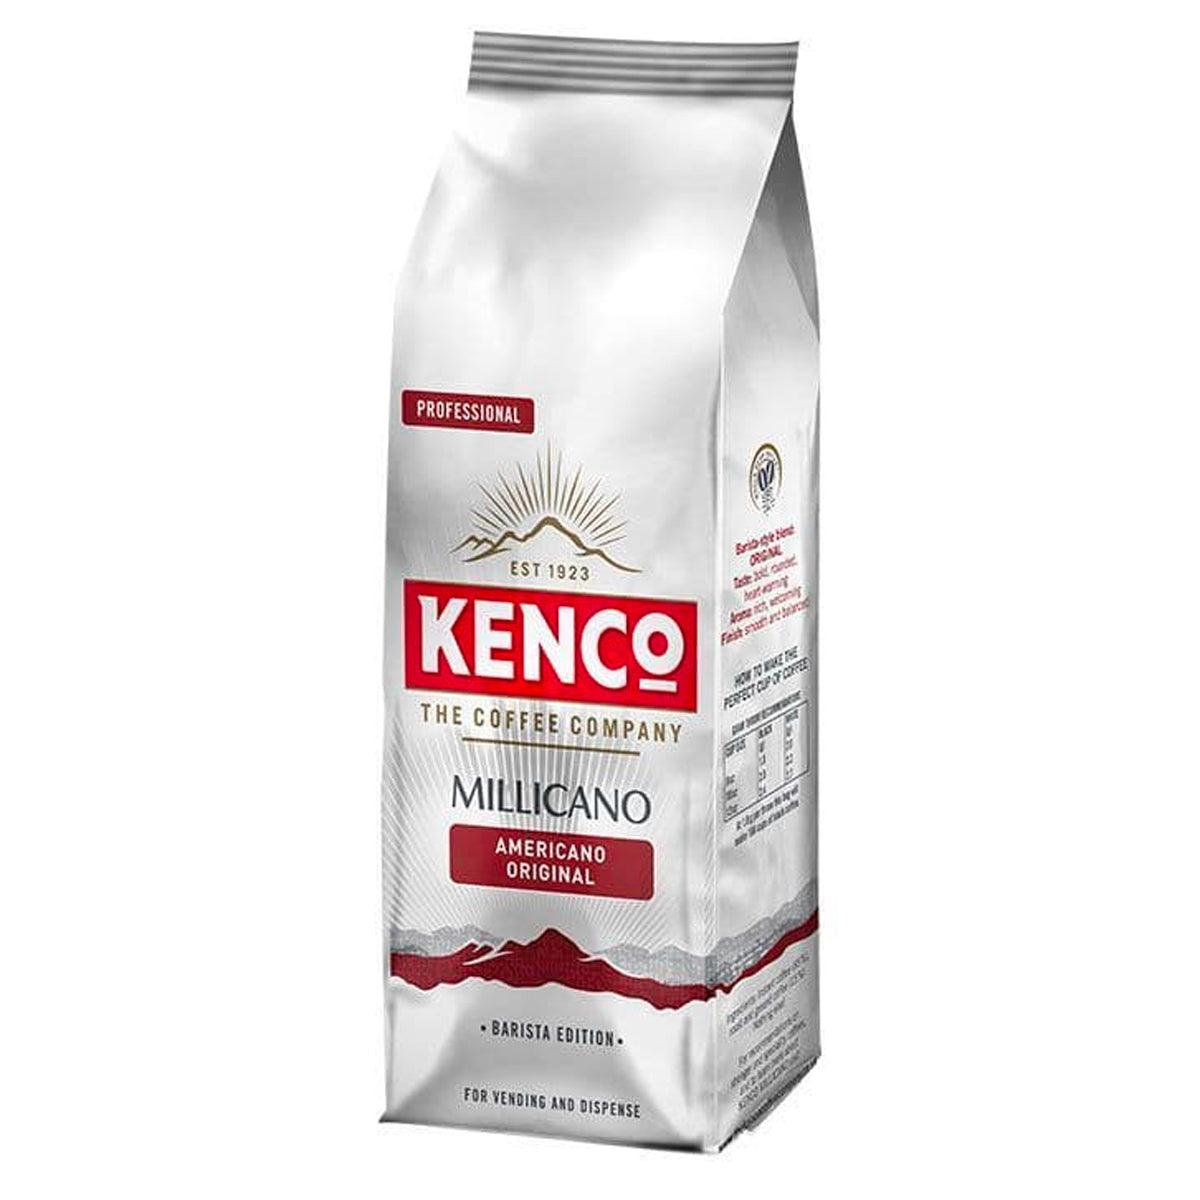 Kenco Millicano Vending Coffee - 300g Bag - Vending Superstore